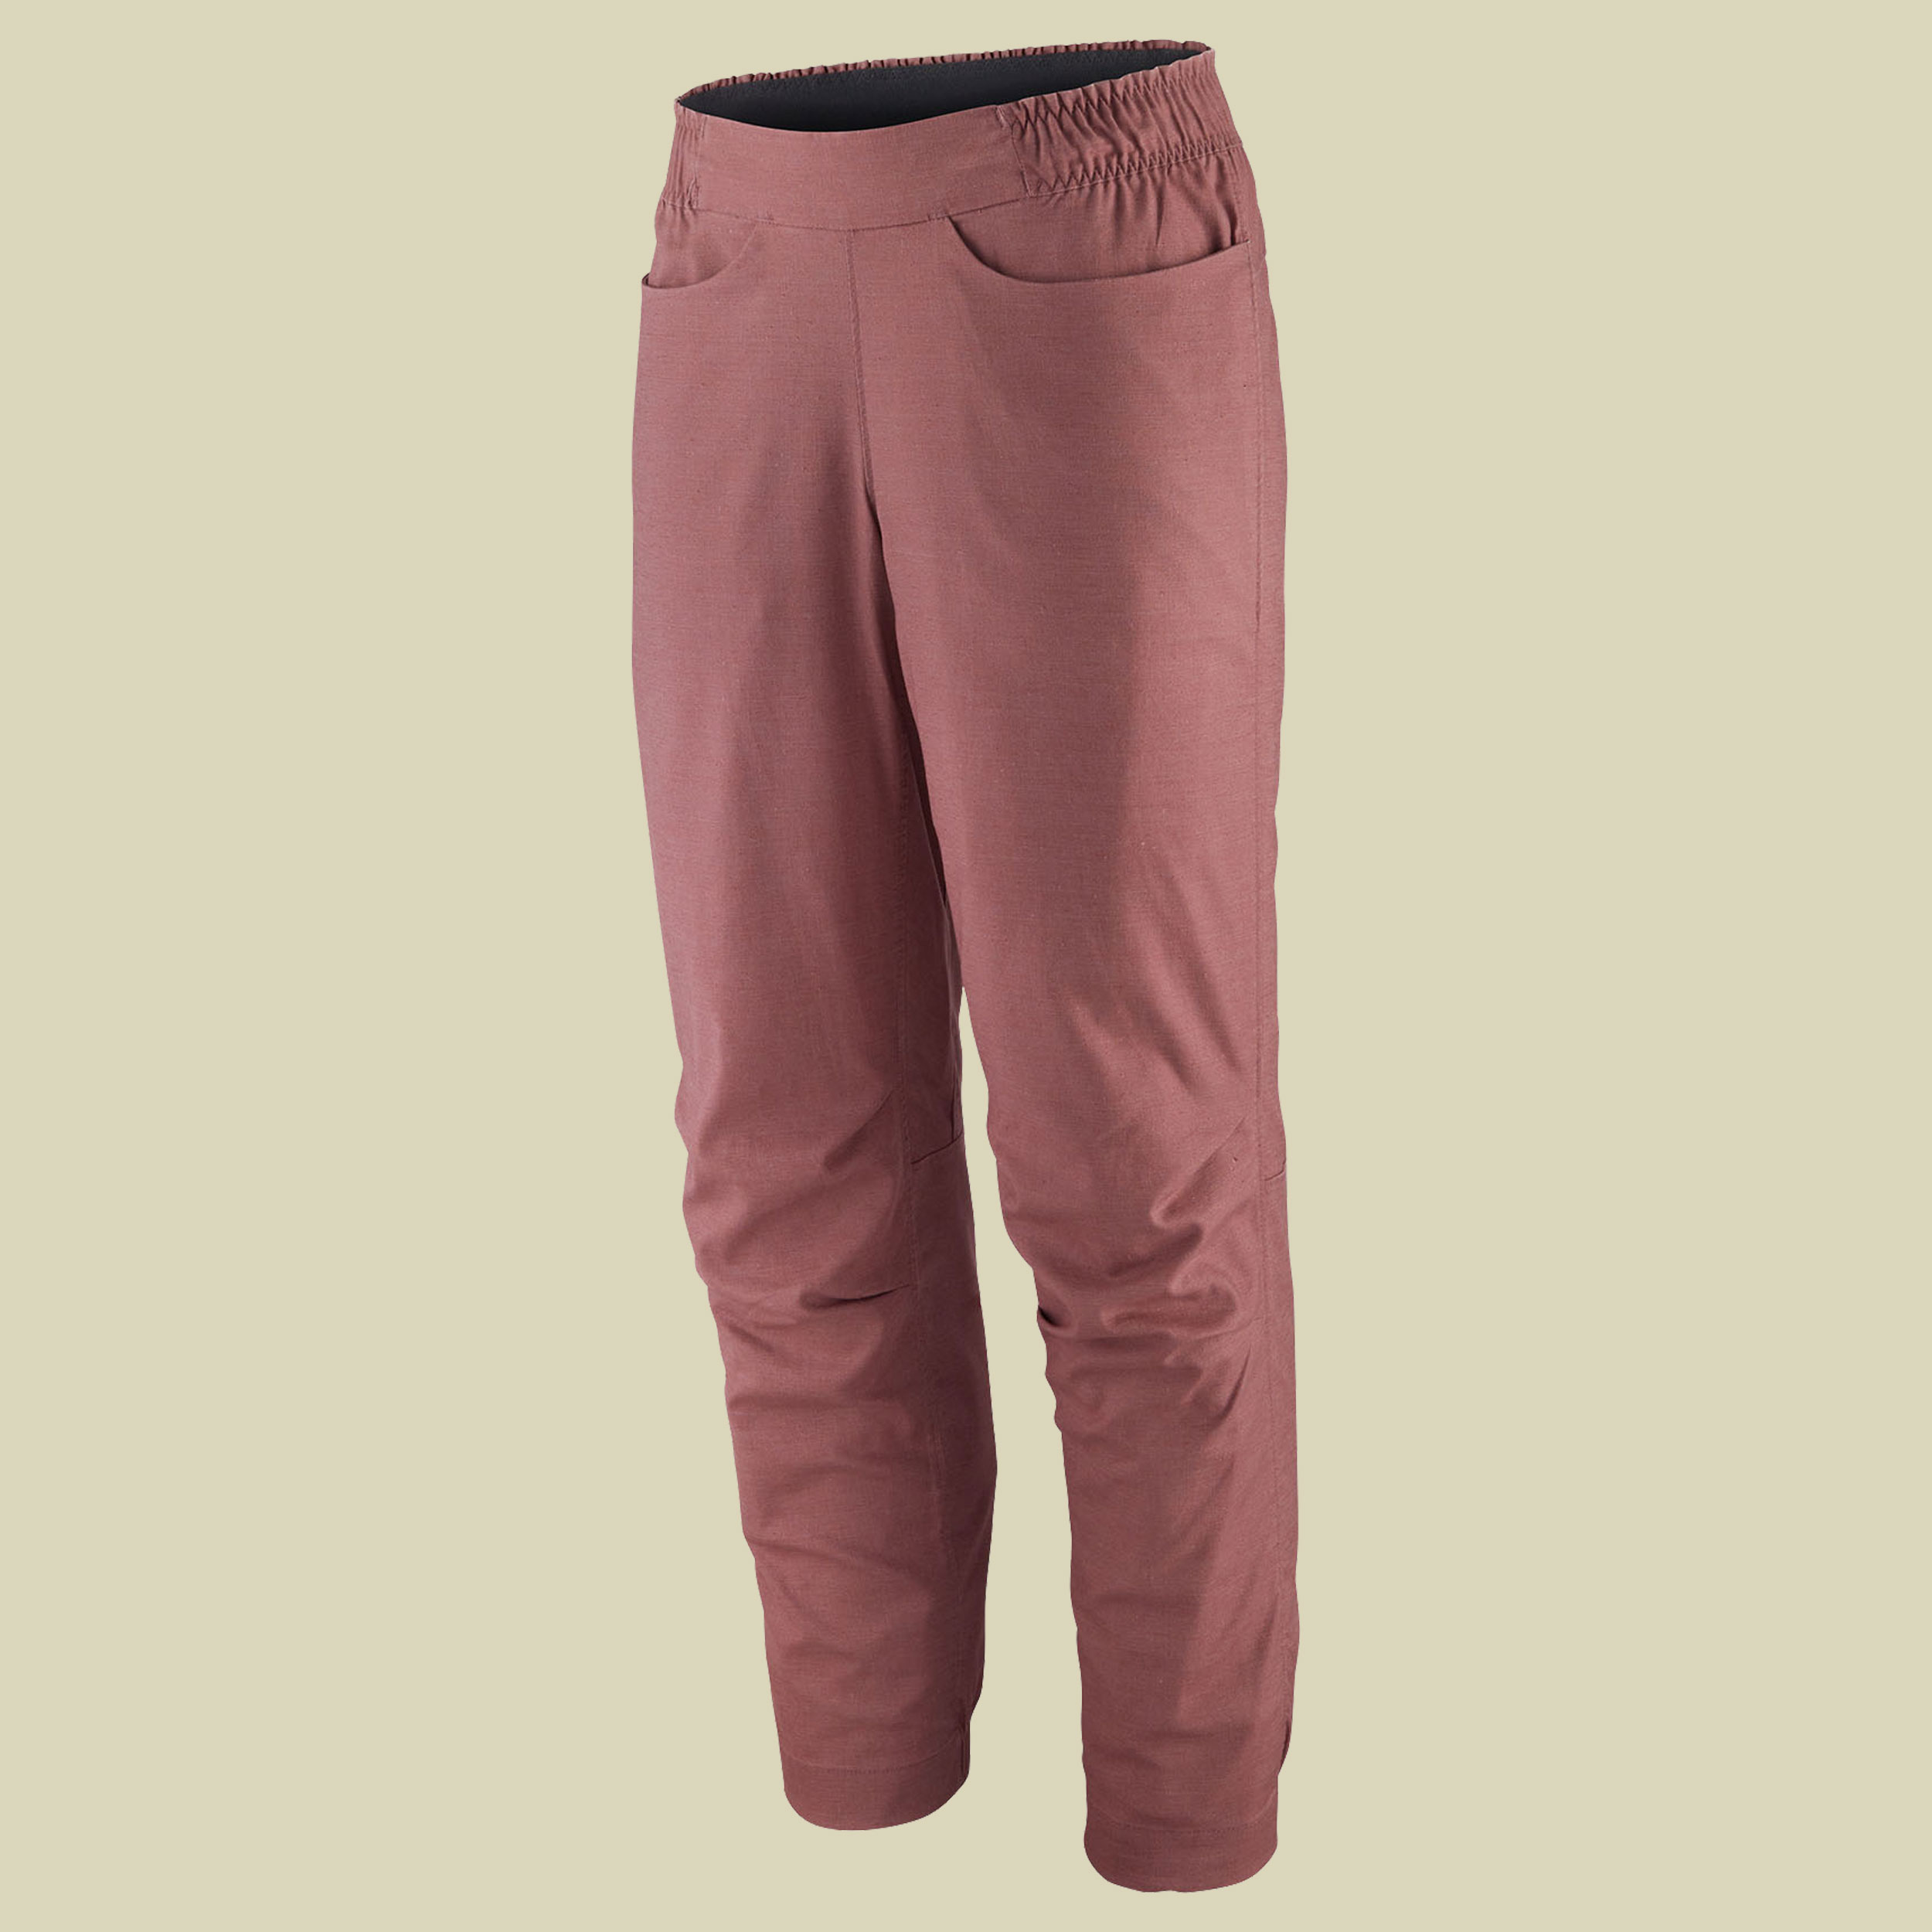 Hampi Rock Pants Women Größe S (6) Farbe evening mauve